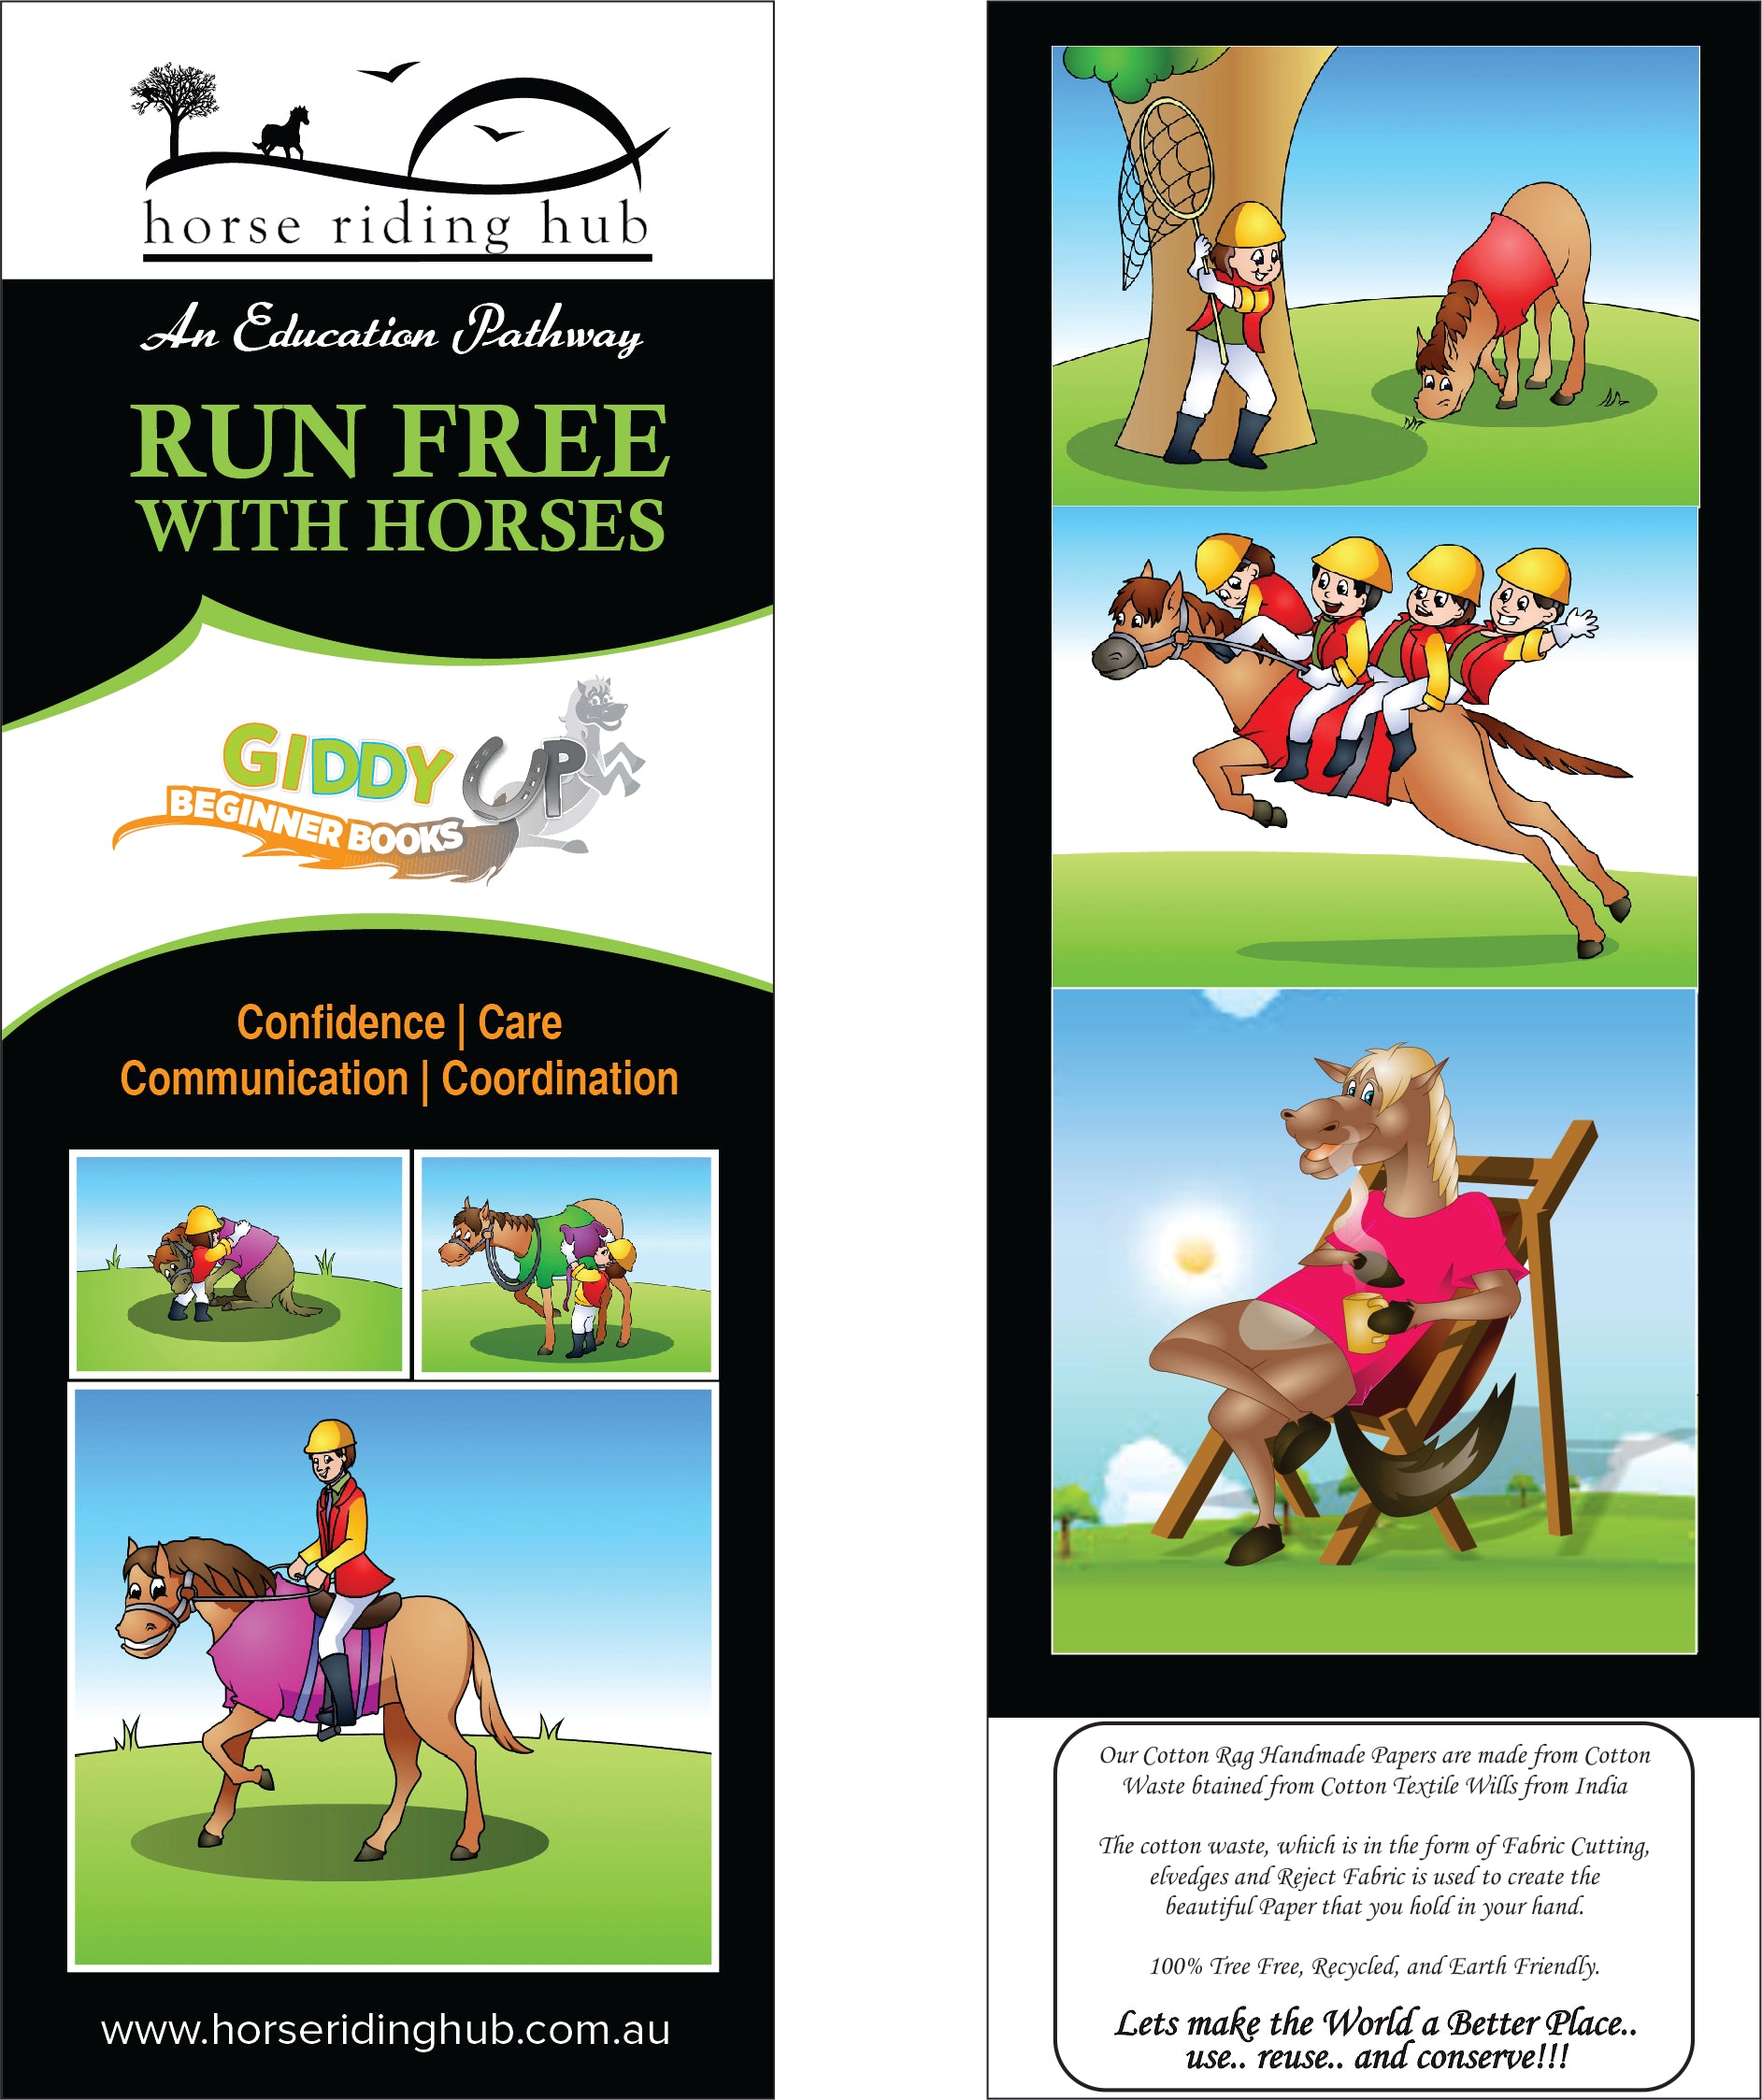 Online Horse Riding School - Member resource site